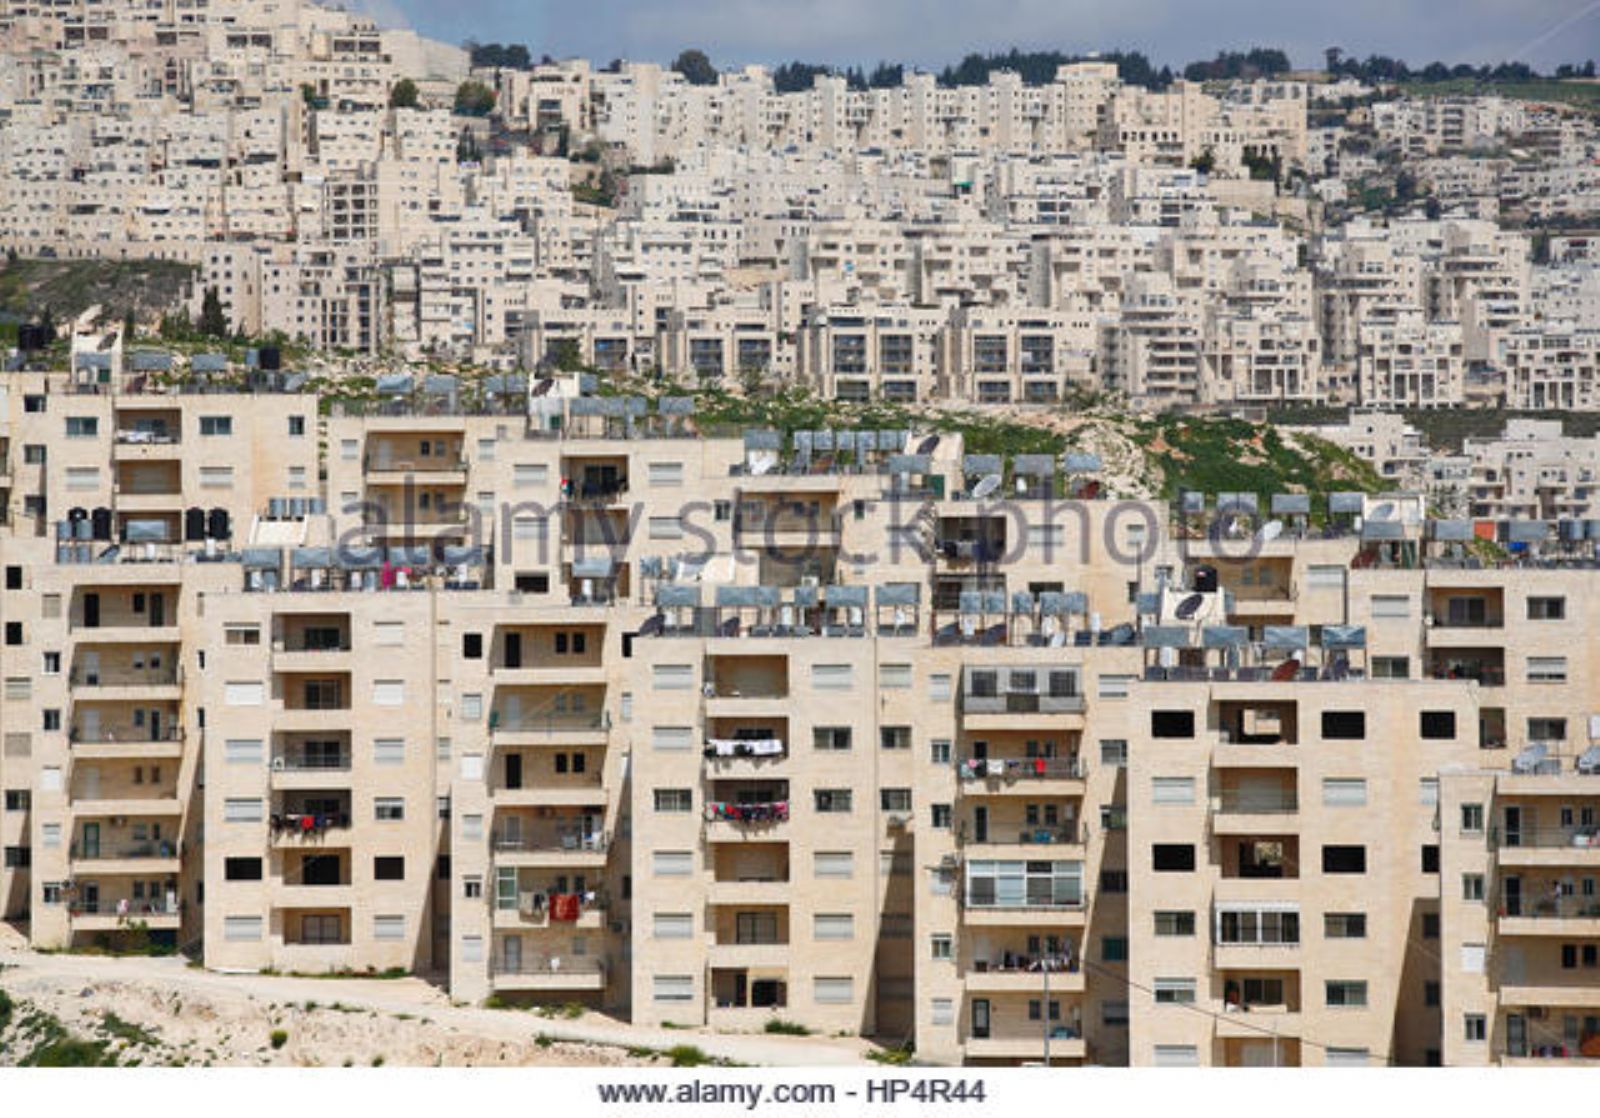 Israel to build three new settlements in Bethlehem